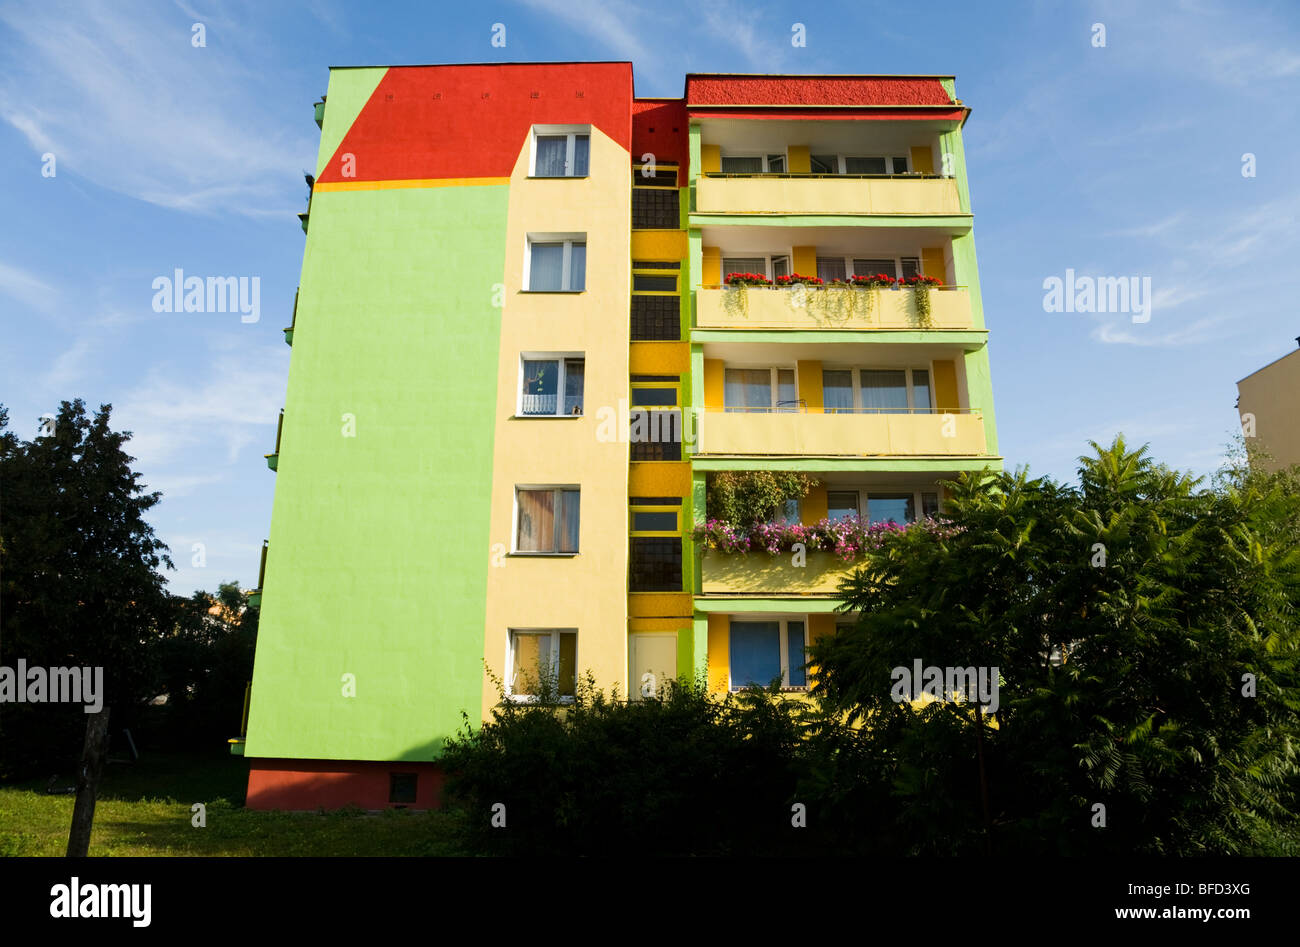 Polish residential housing blocks in the town of Kedzierzyn-Kozle. Poland. Stock Photo